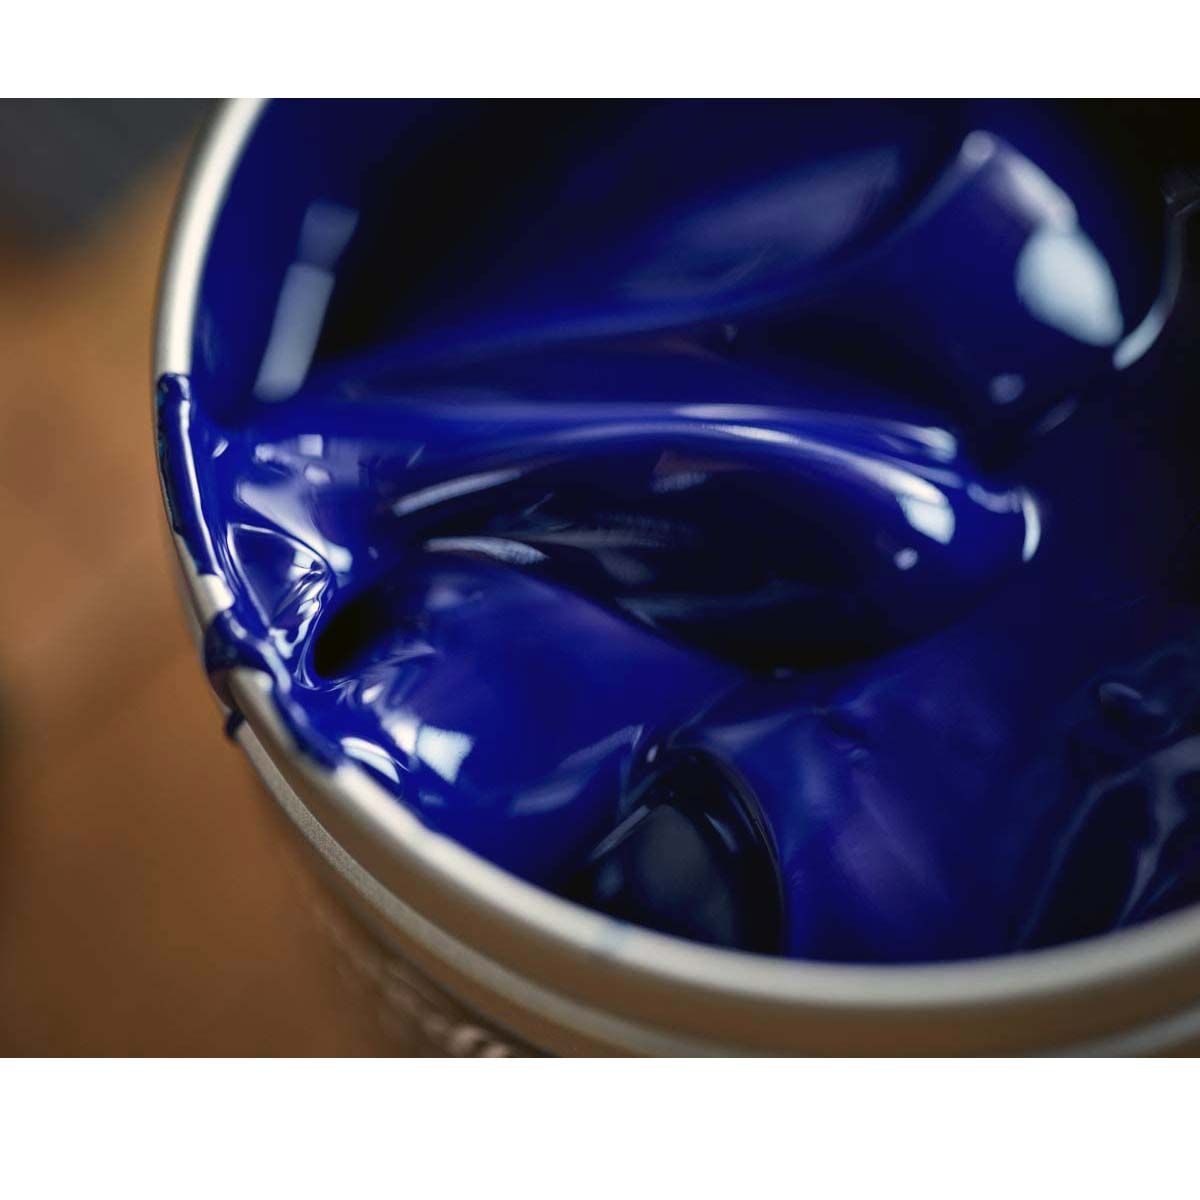 Speedball Super Pigmented Acrylic Ink 57ml-Indigo Blue 956 : Great Value  for Money